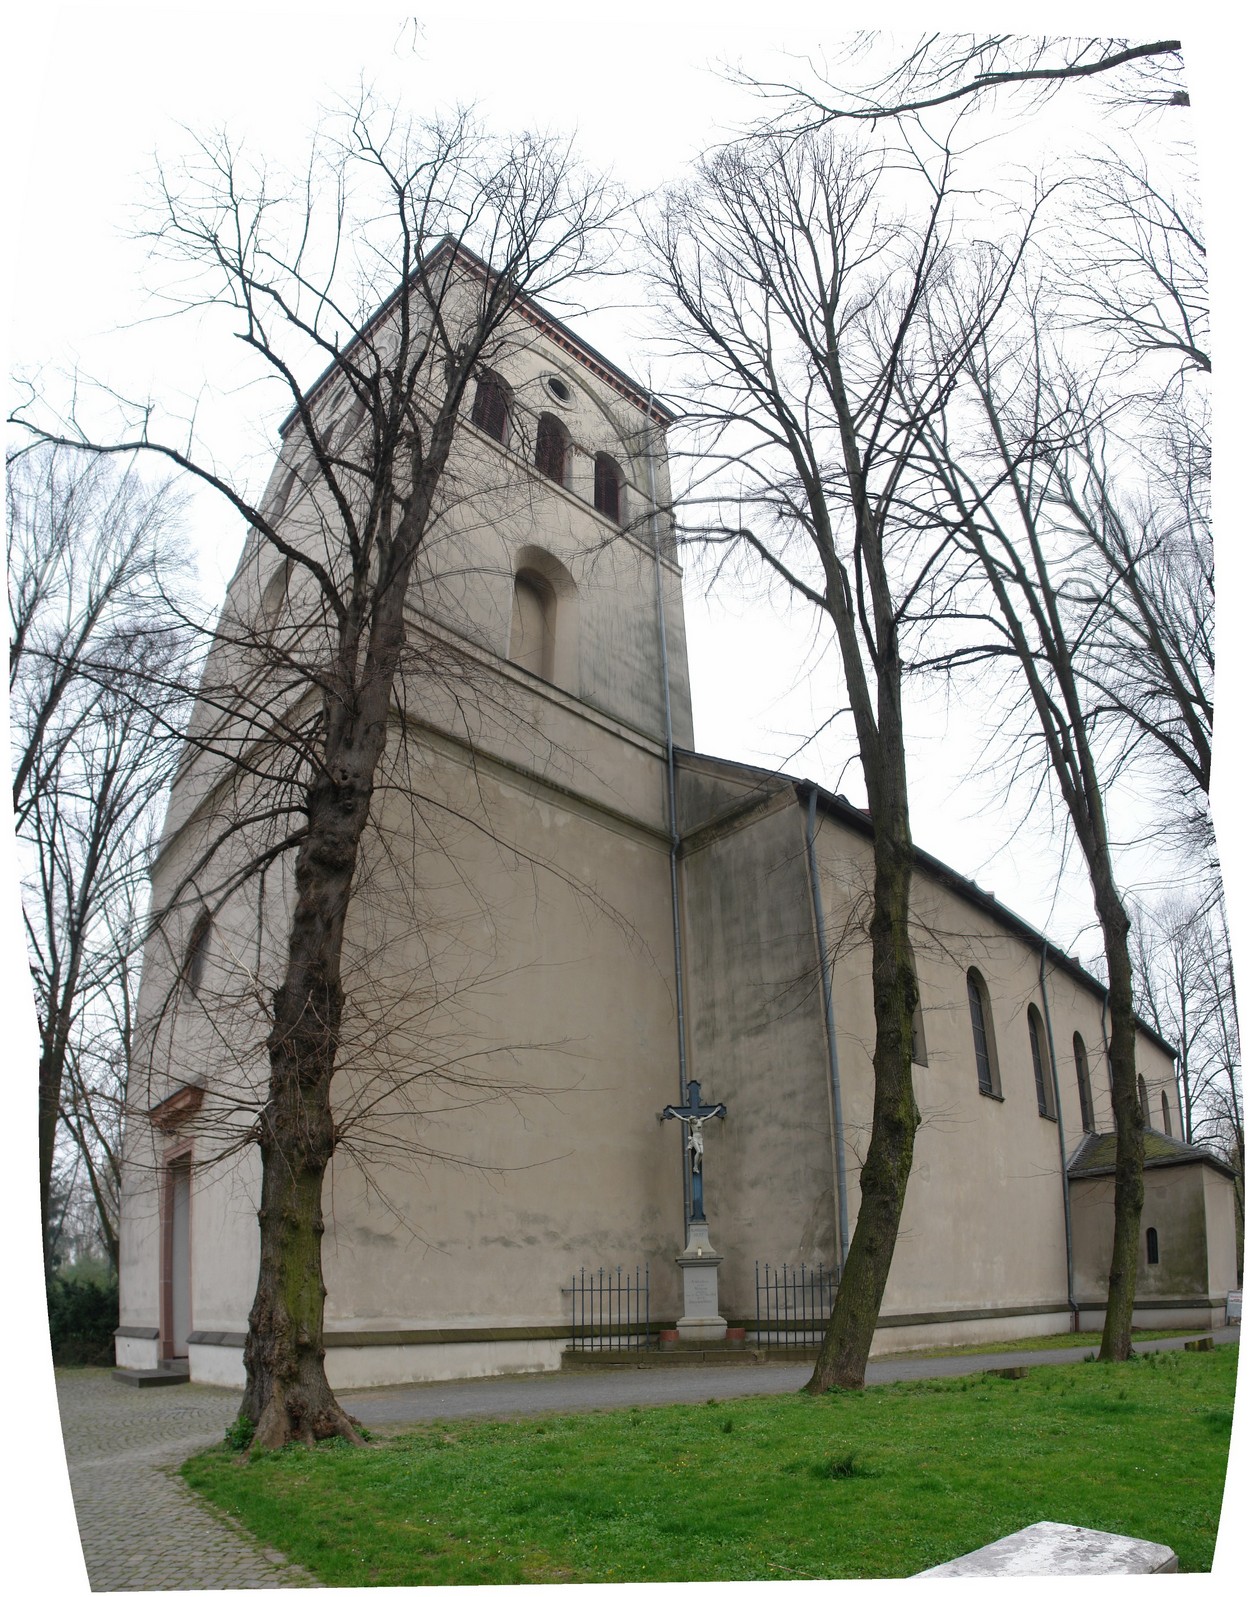 St. Gereon in Merheim